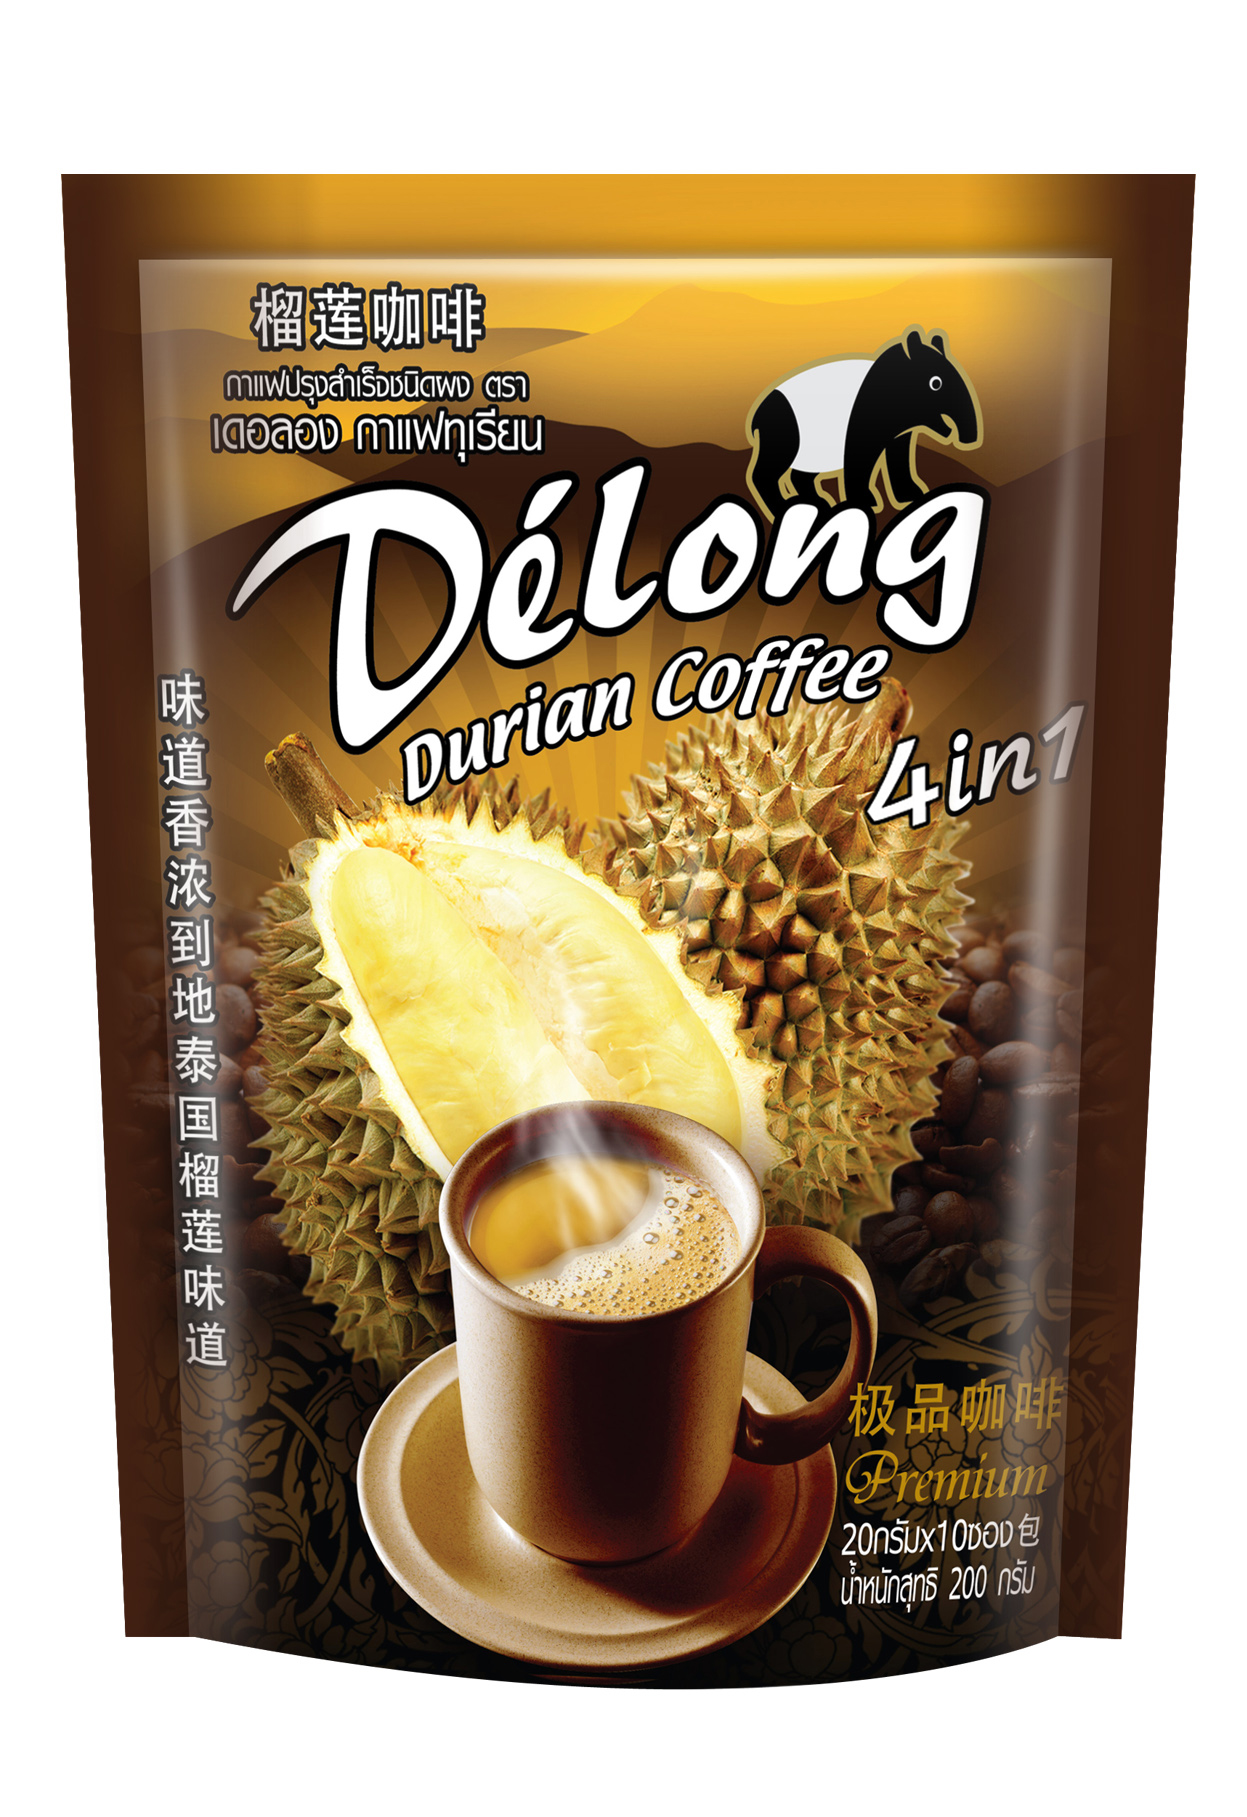 Delong Durian Coffee 4in1